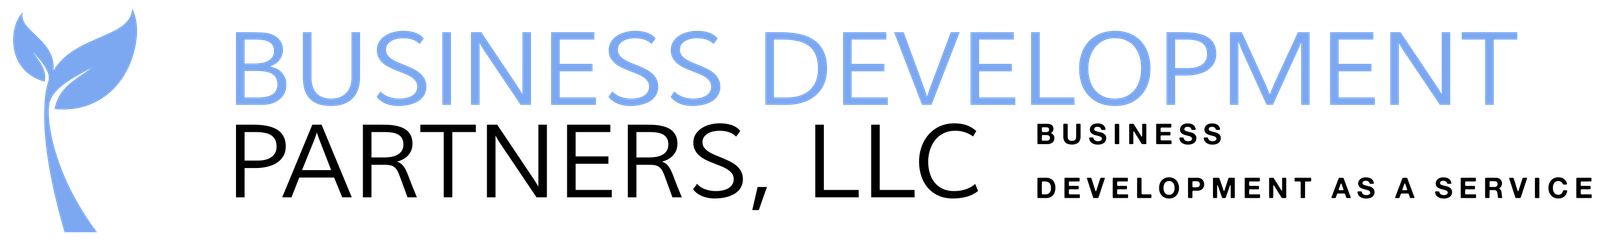 Business development partners logo